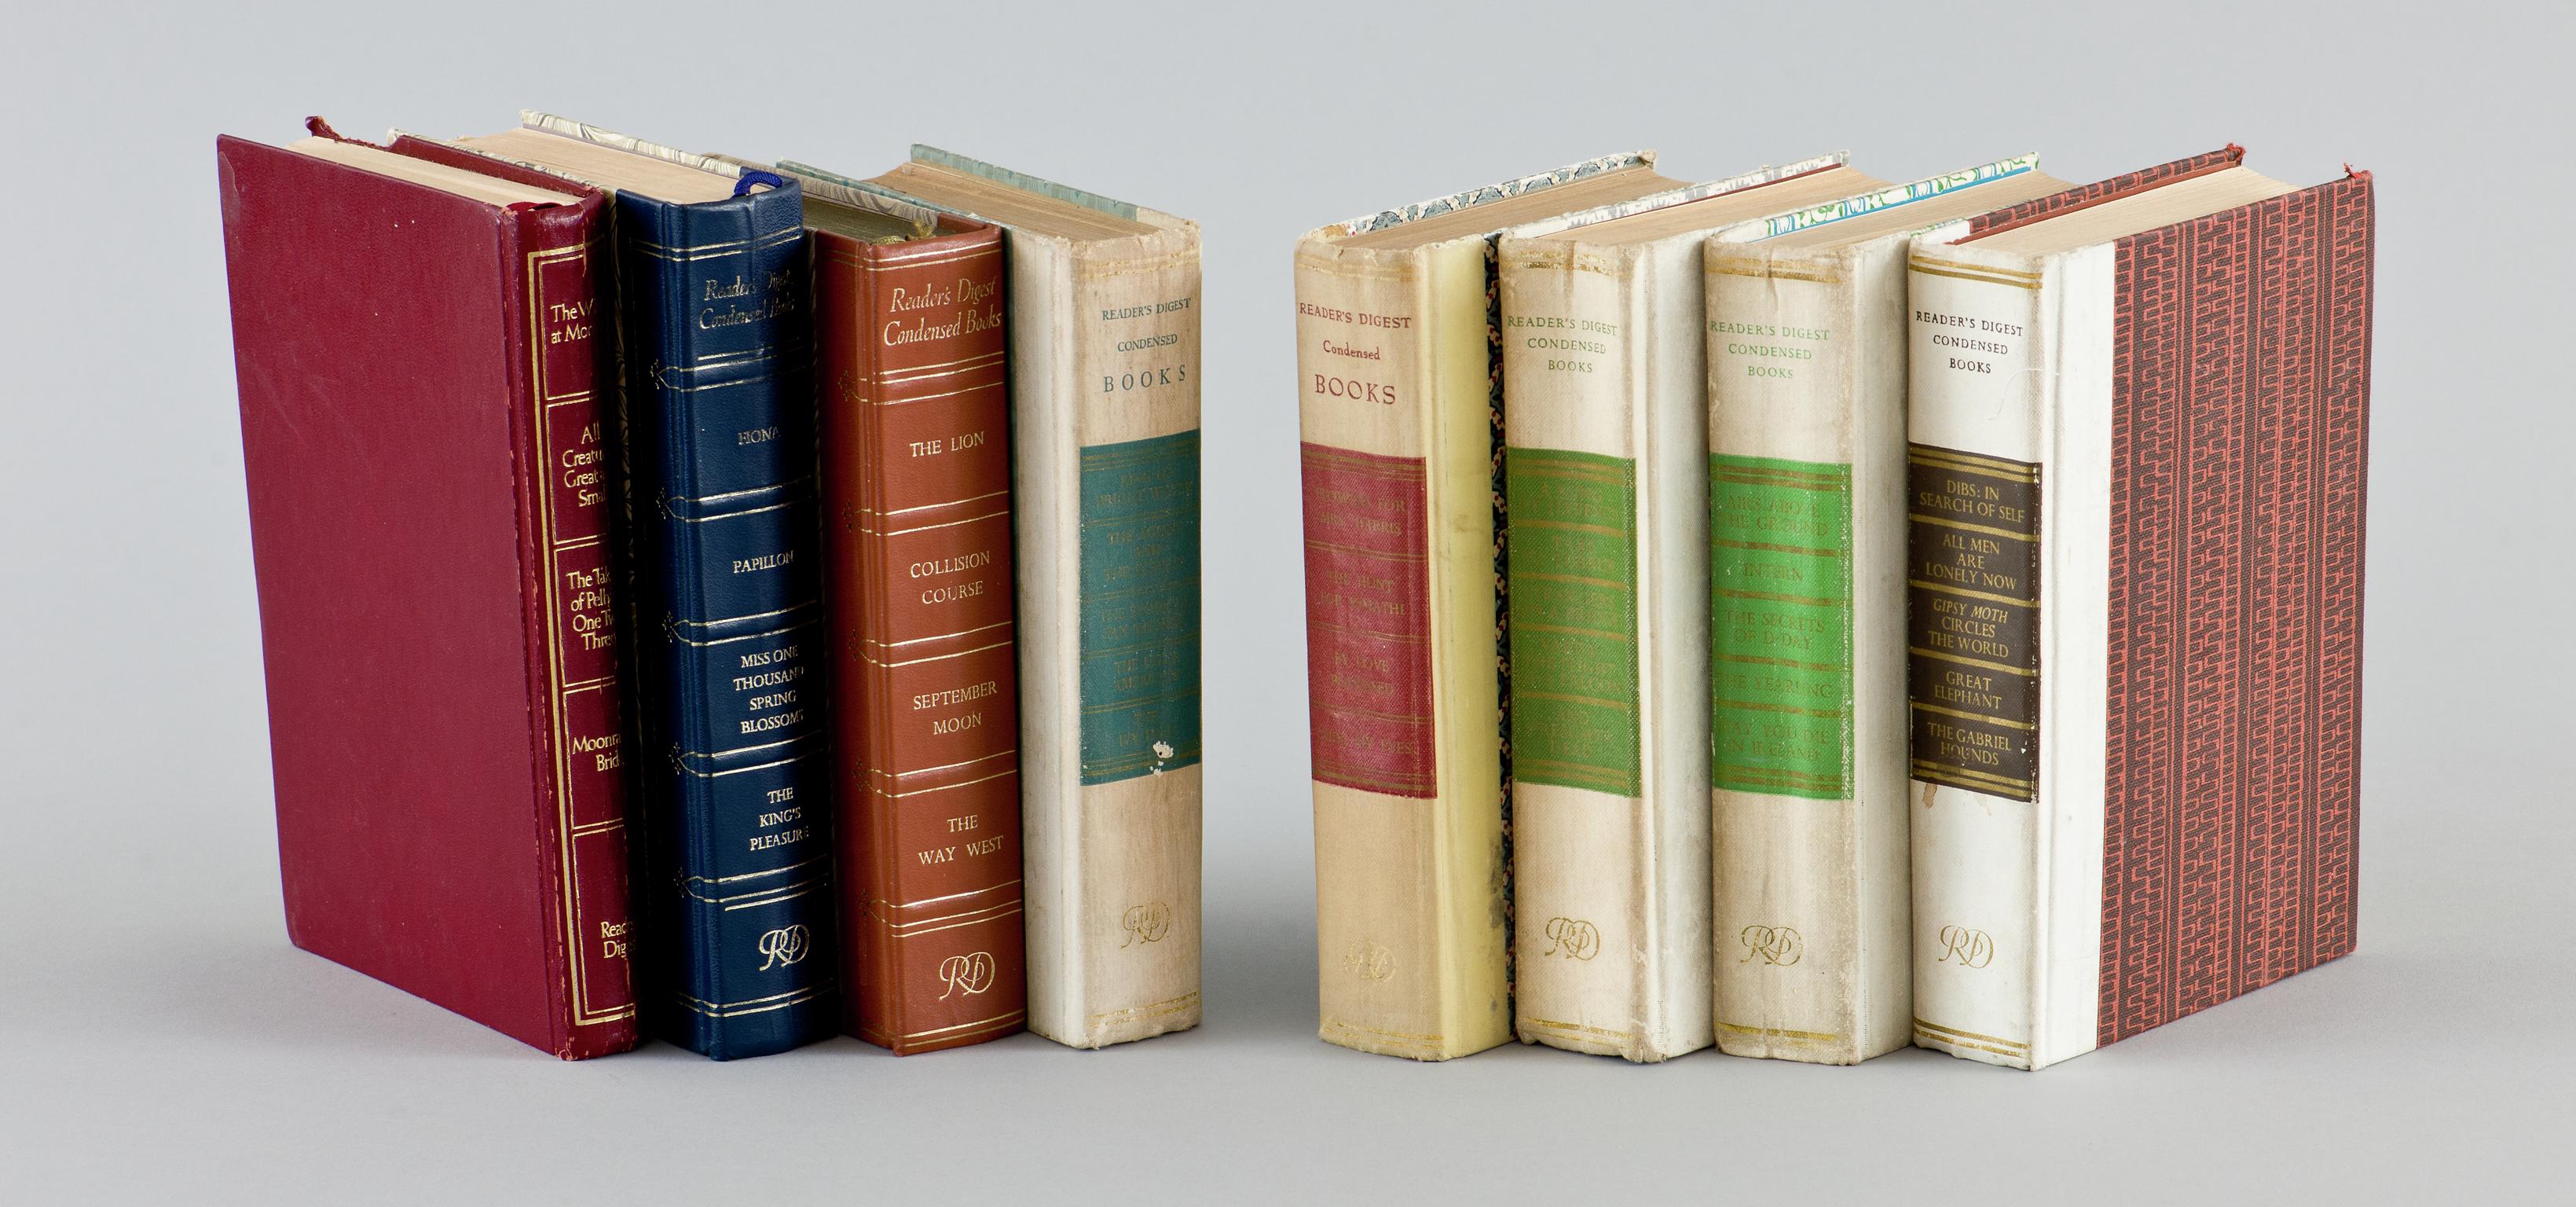 Series of Reader's Digest Condensed Books.